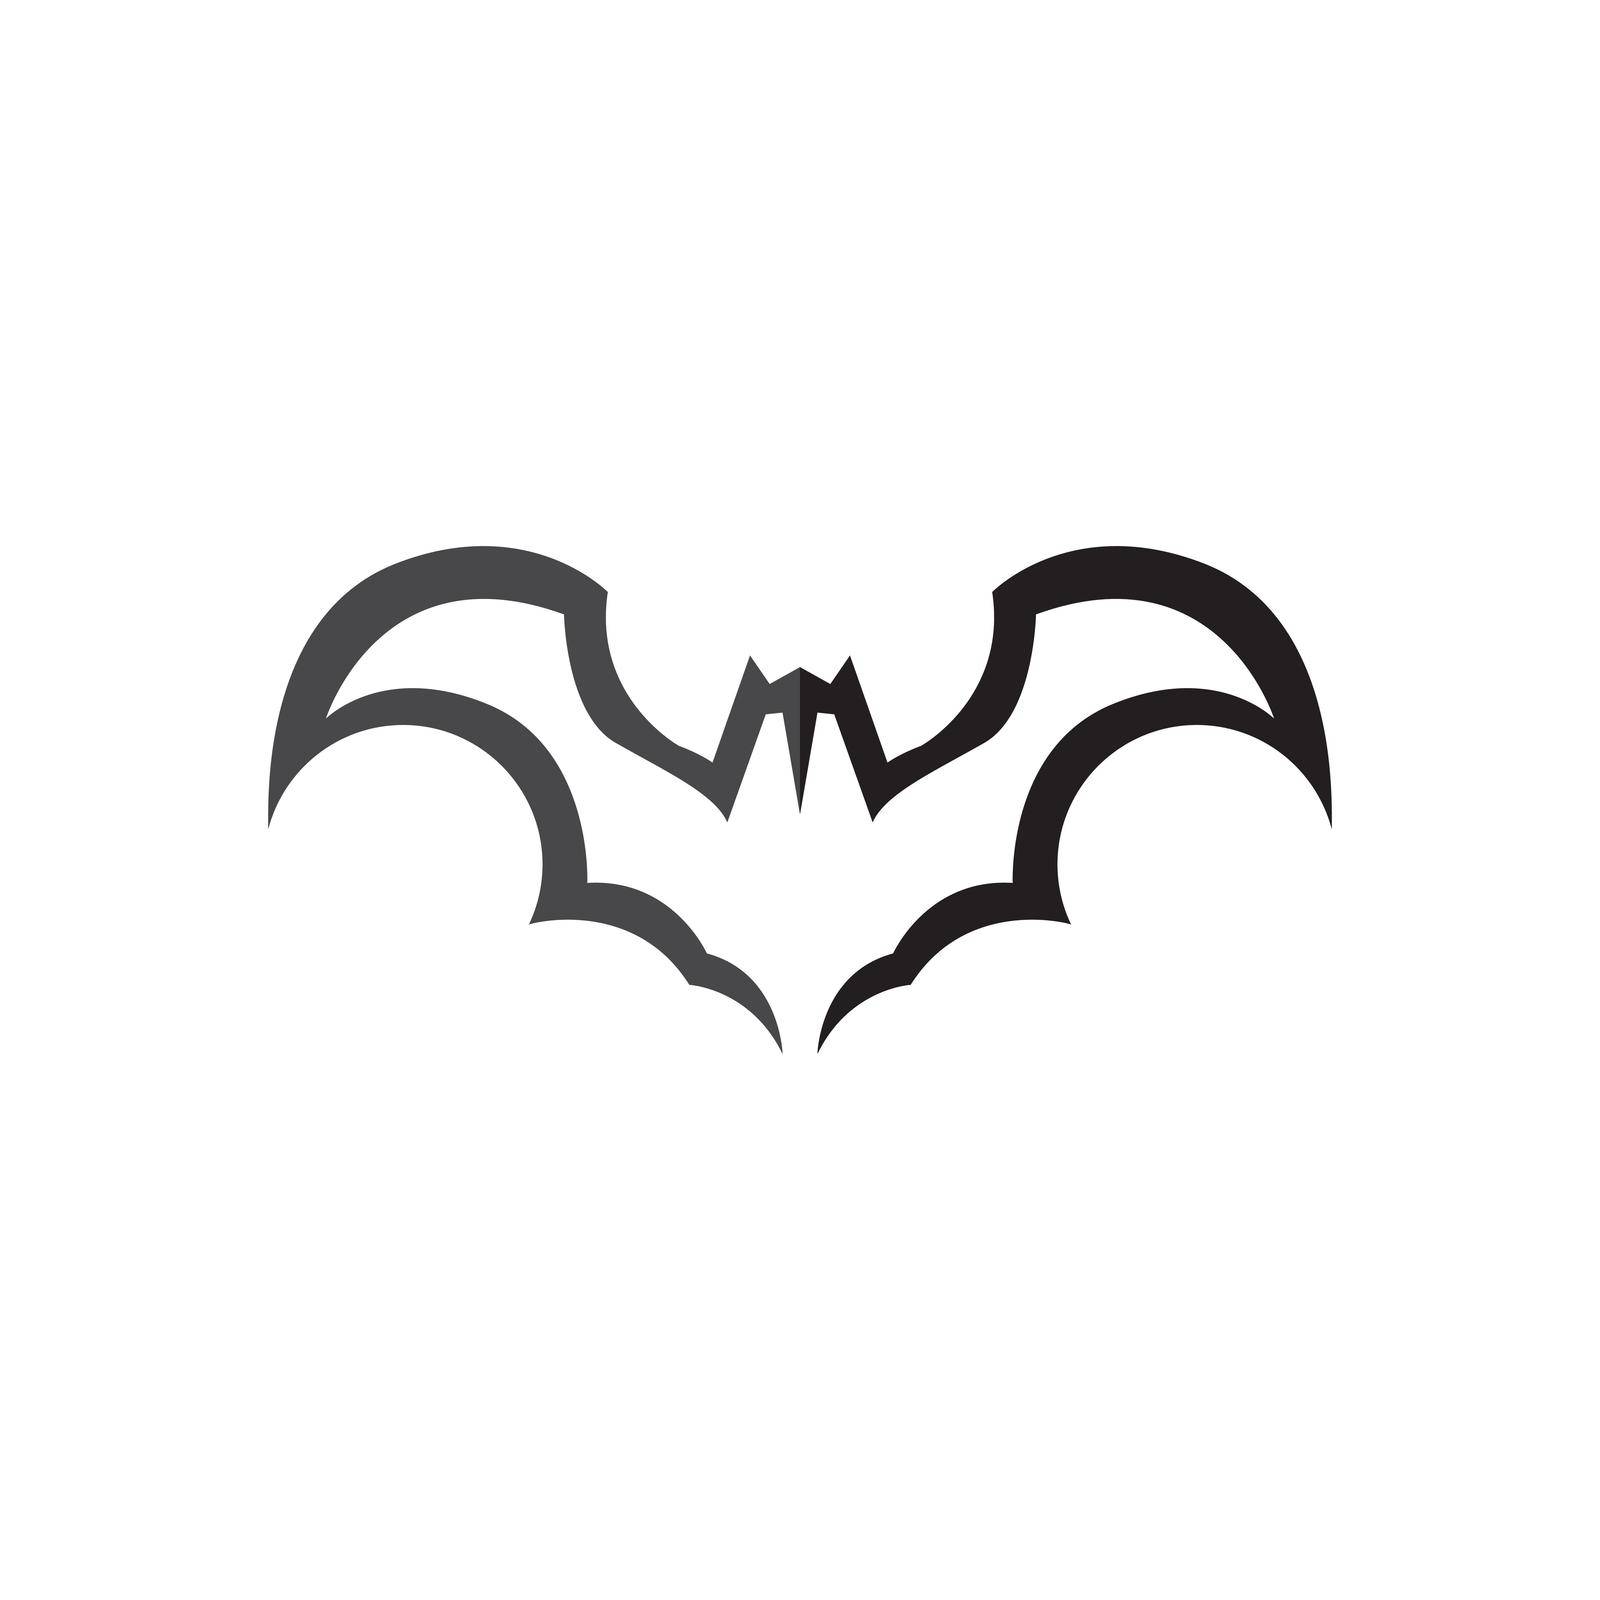 bat vector icon logo template by Mrsongrphc